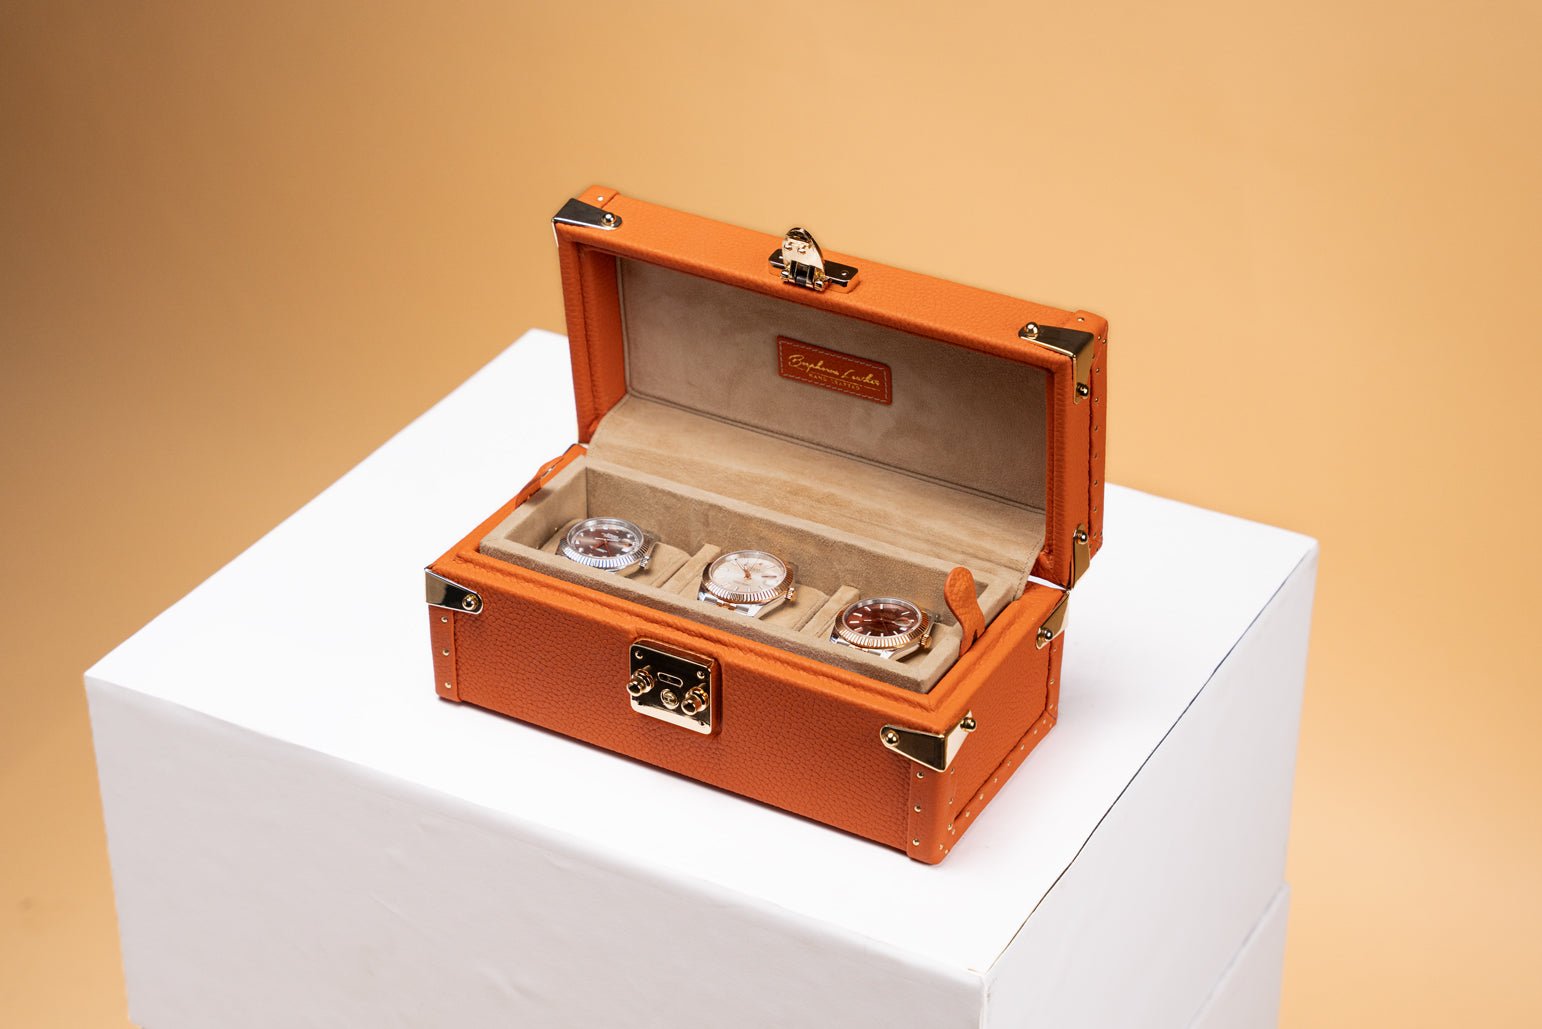 Bosphorus LeatherPetra Watch Case - Togo Orange For 3 Watches